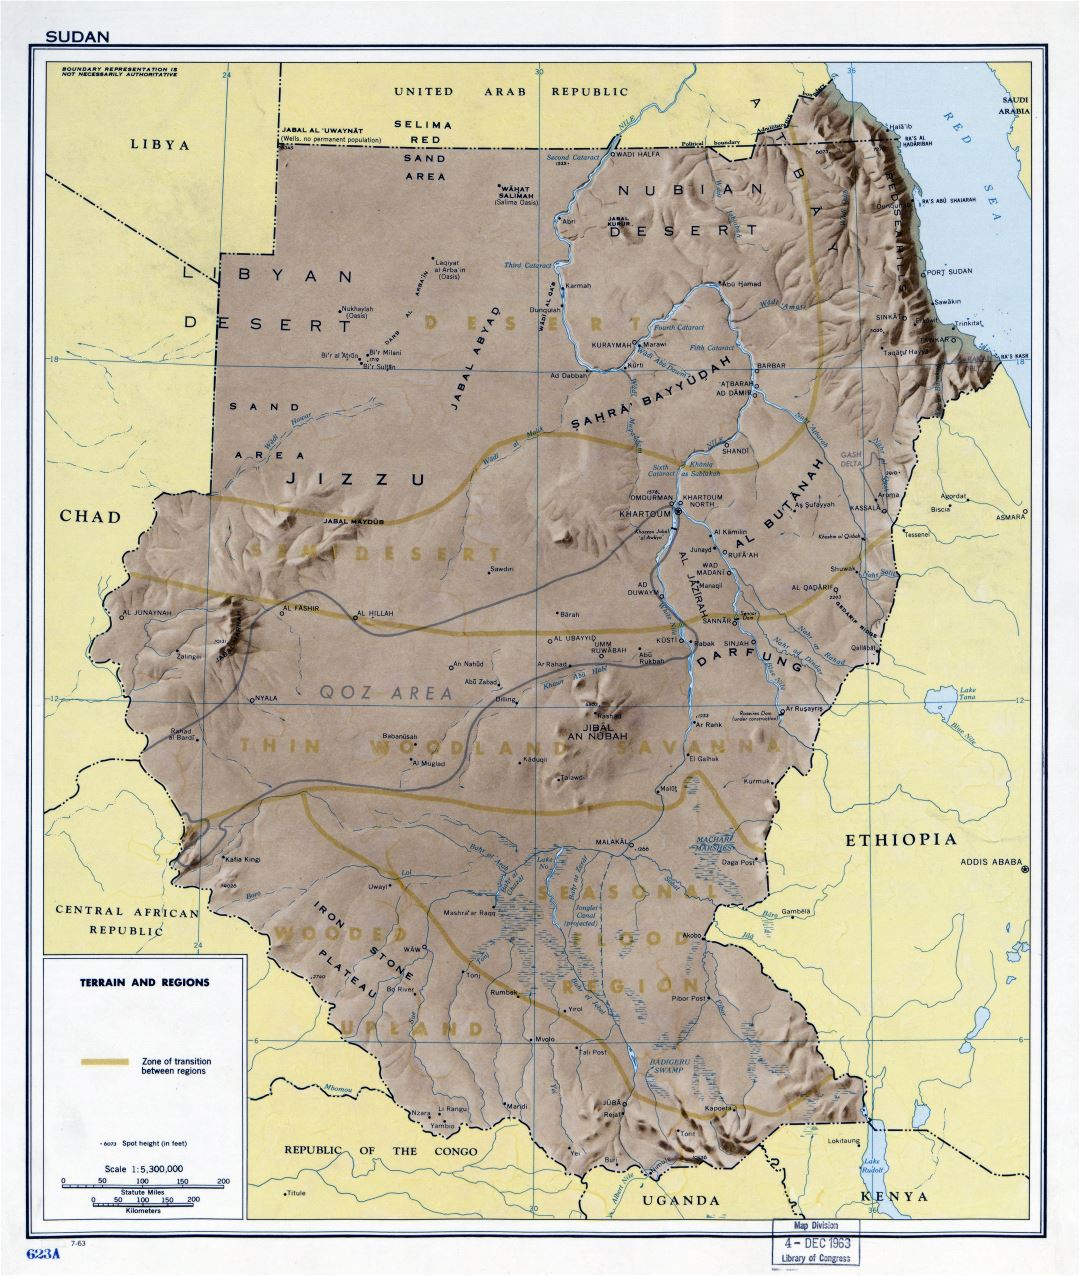 Крупномасштабная карта местности и регионов Судана - 1963